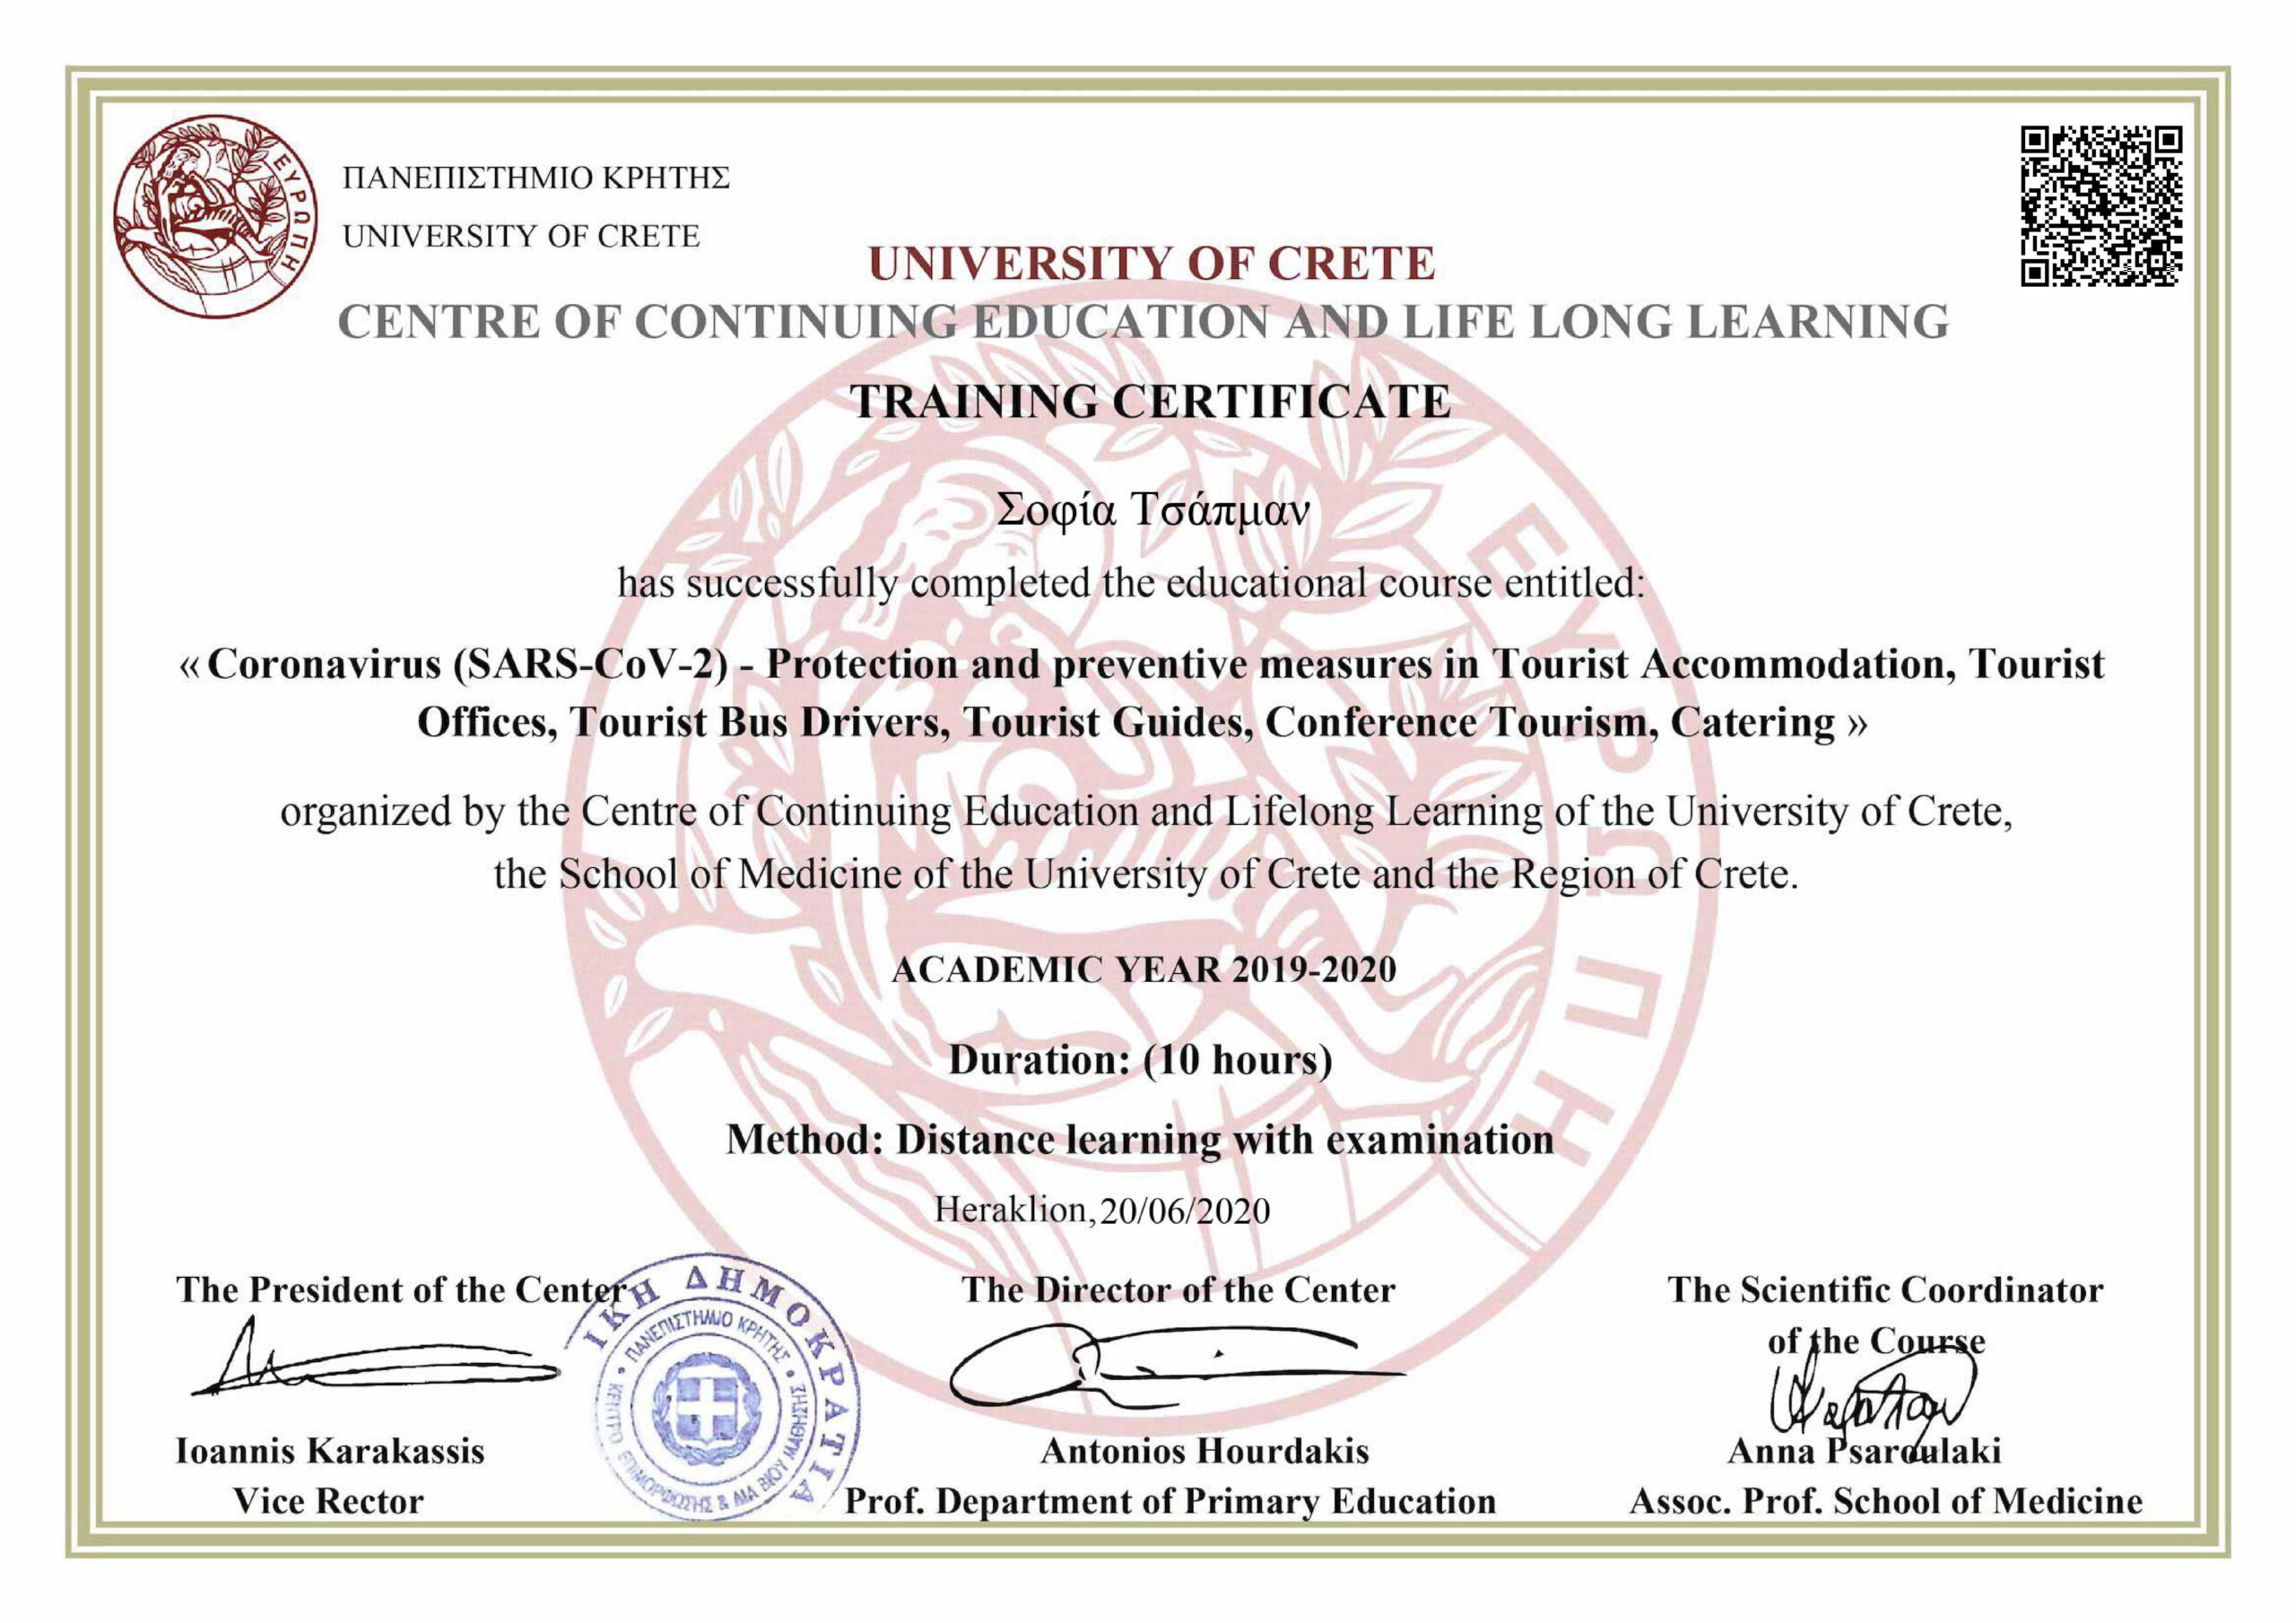 Covid-19 training certificate2020